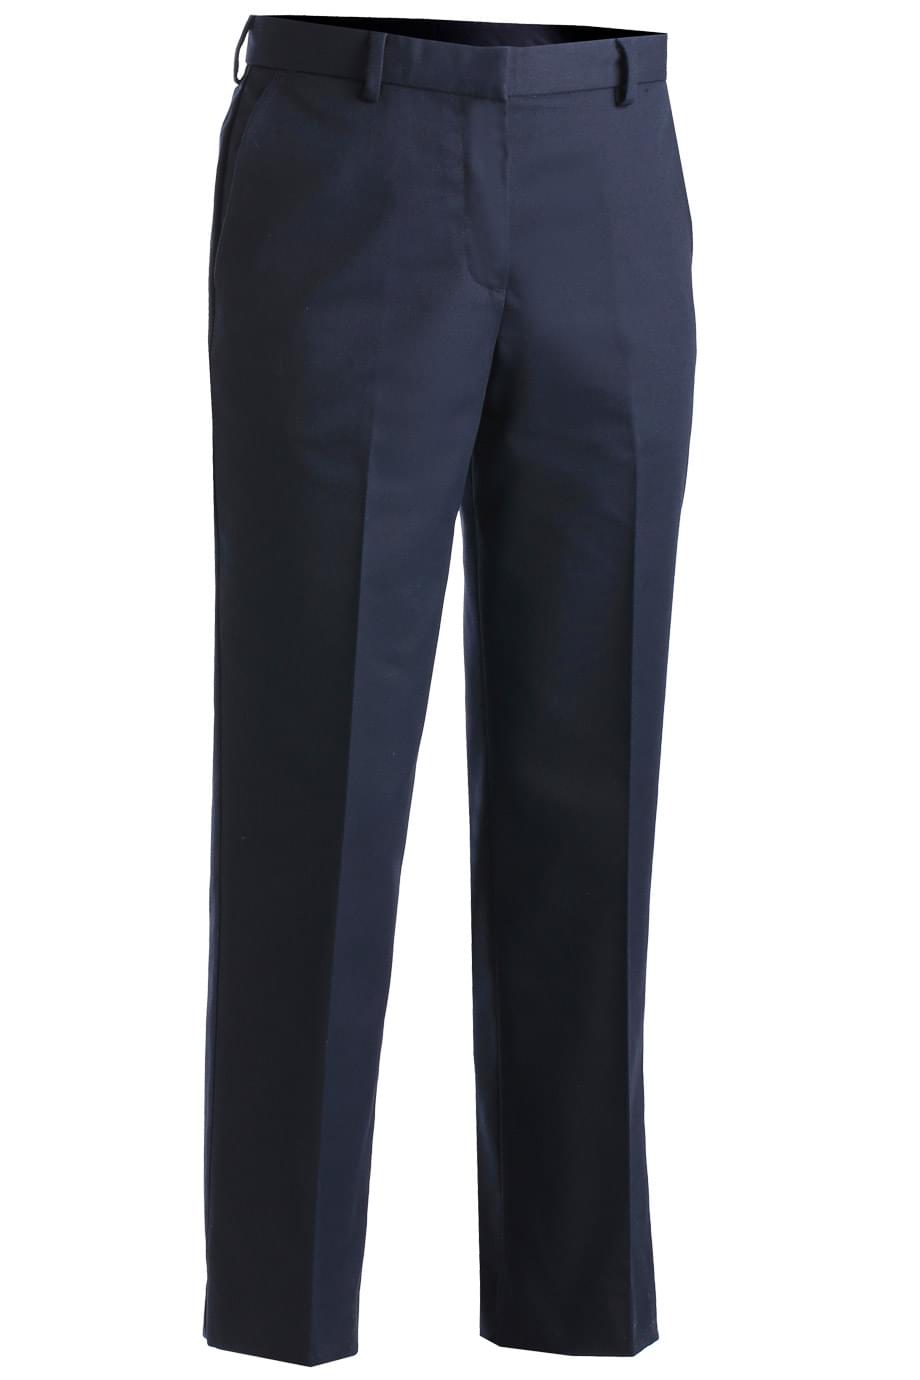 Edwards Garment 8519 - Women's Business Casual Flat Front Pant